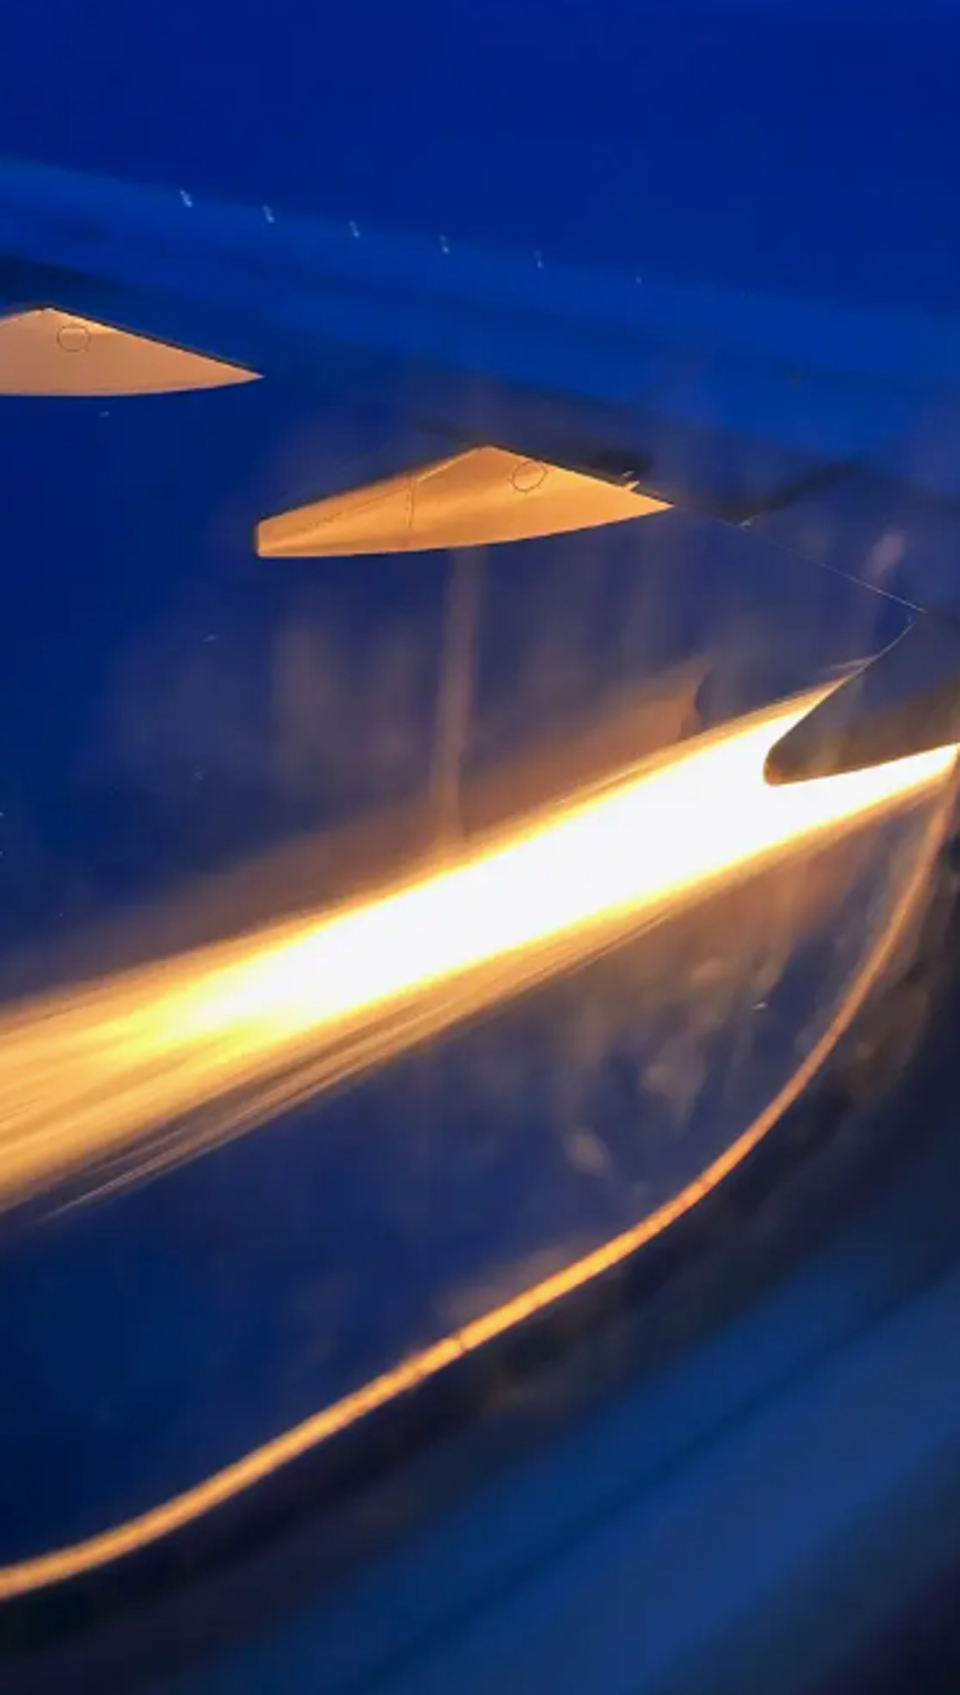 Captura del ala izquierda del Boeing 737 envuelta en llamas (Dorian D. Cerda a través de Storyful)